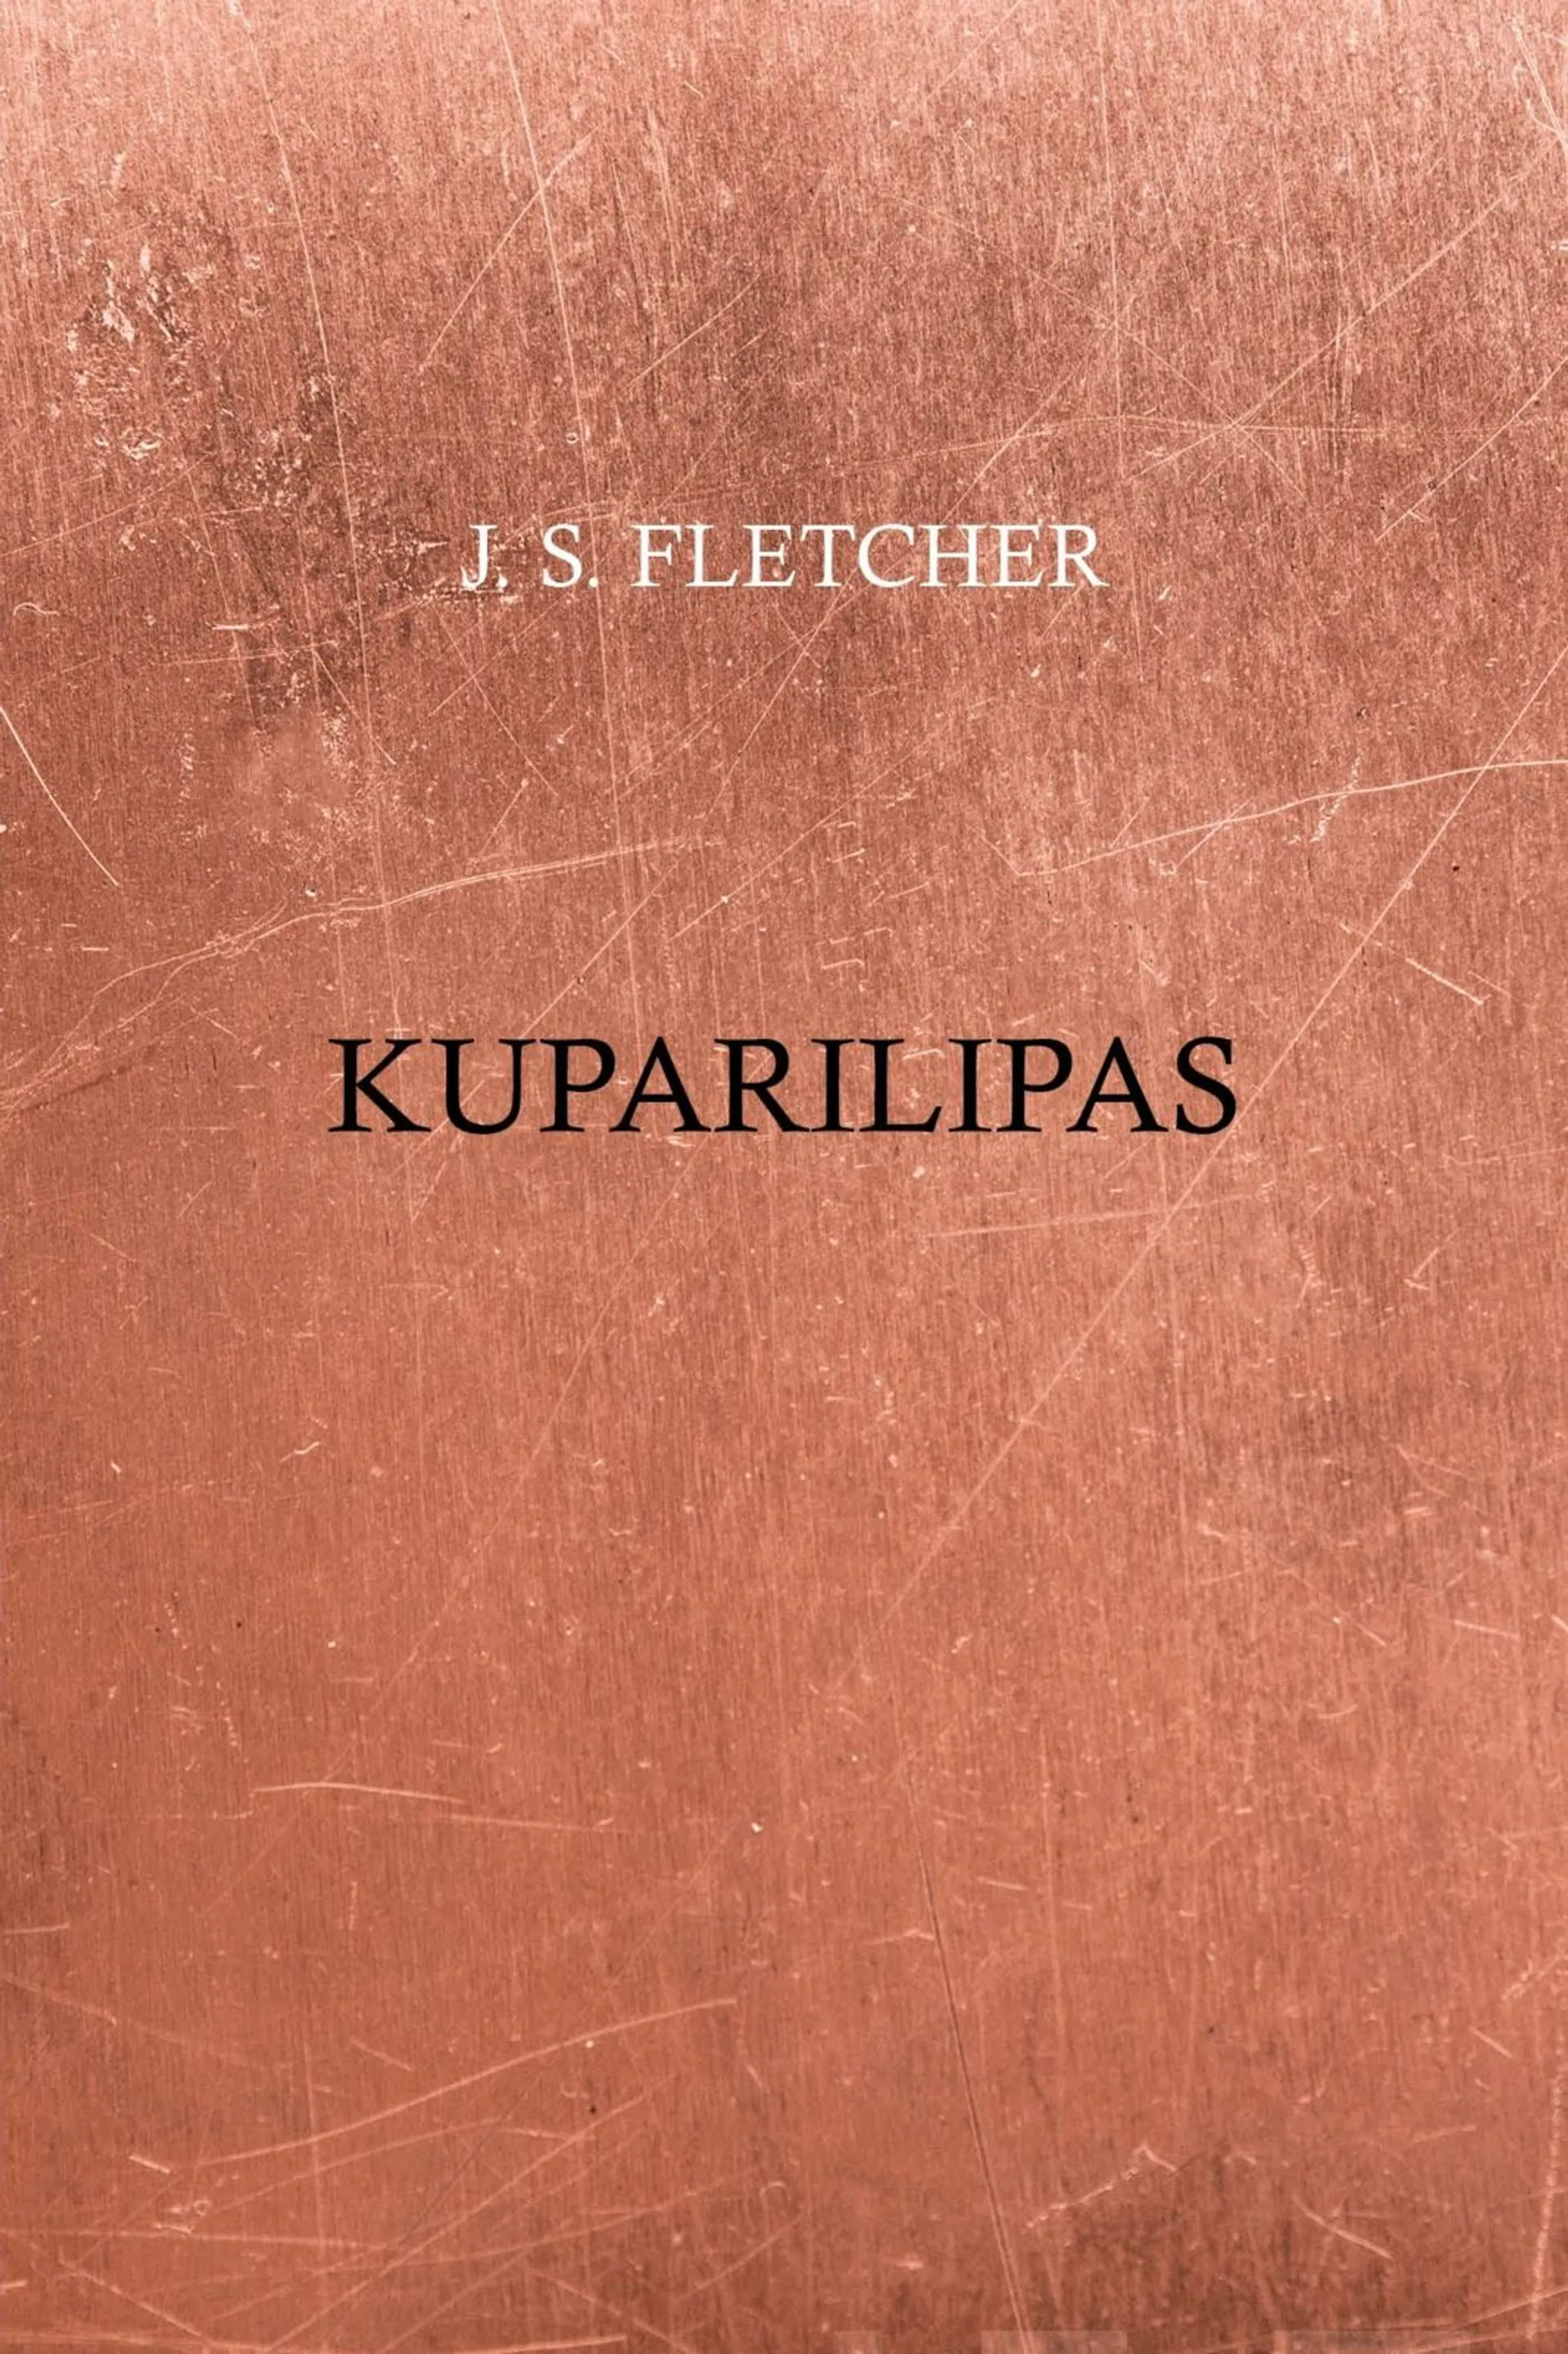 Fletcher, Kuparilipas